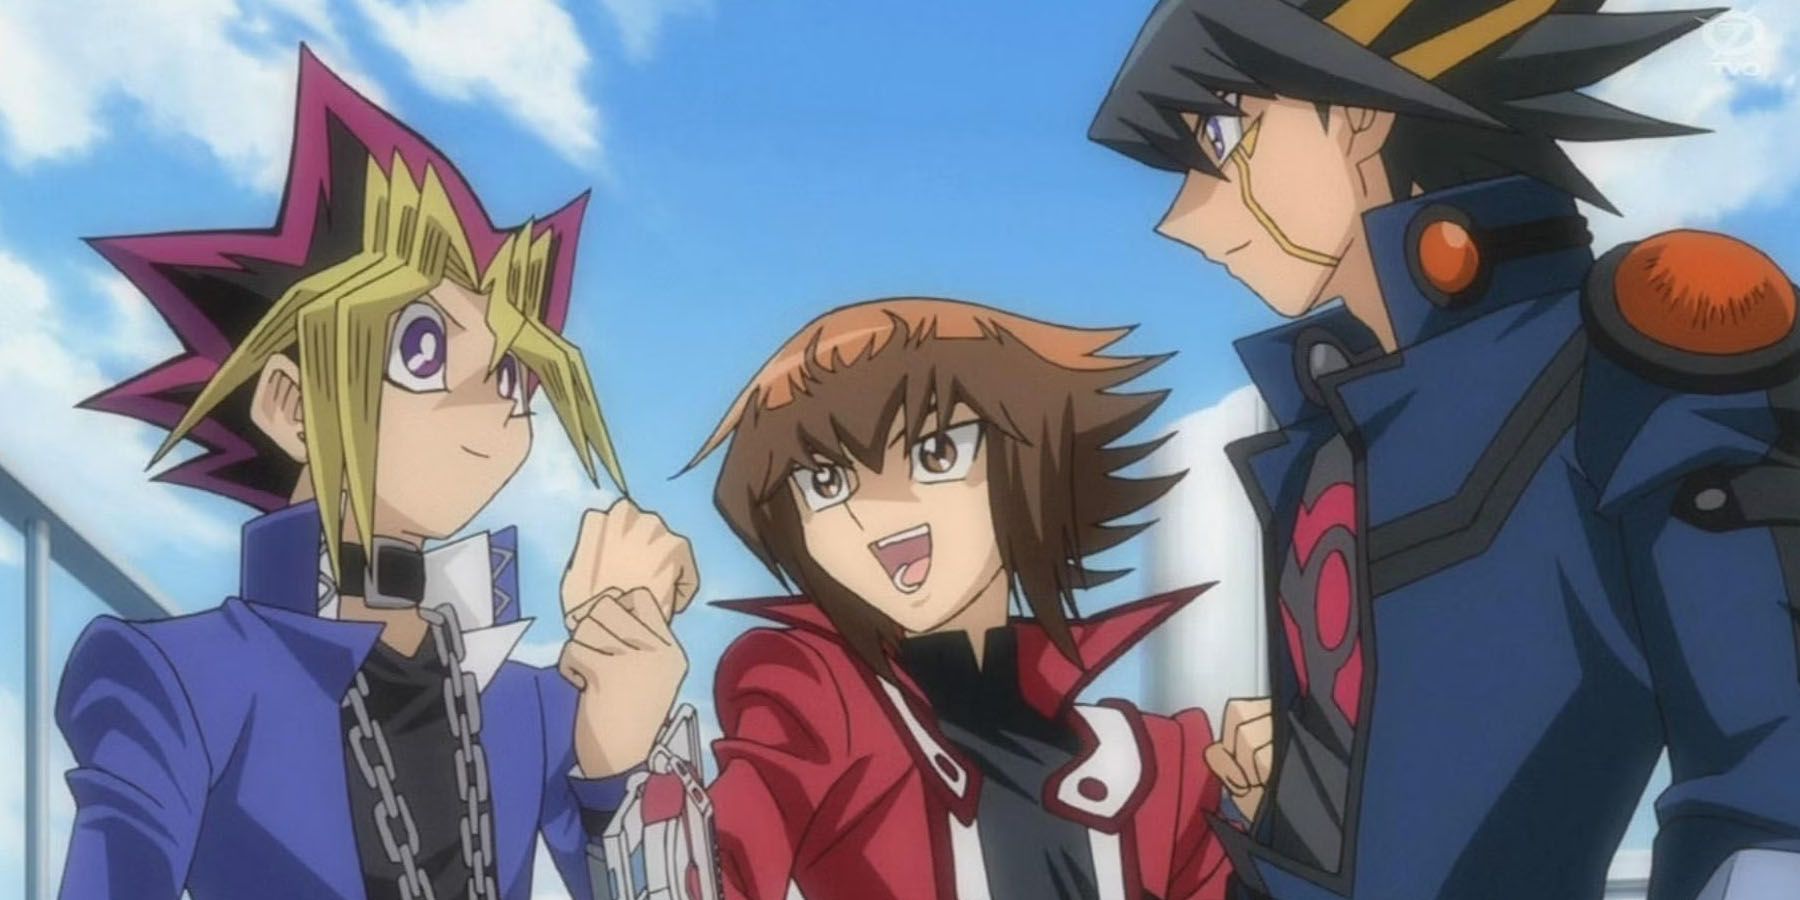 A screenshot of Yugi, Jaden, and Yusei from the Yu-Gi-Oh anime.